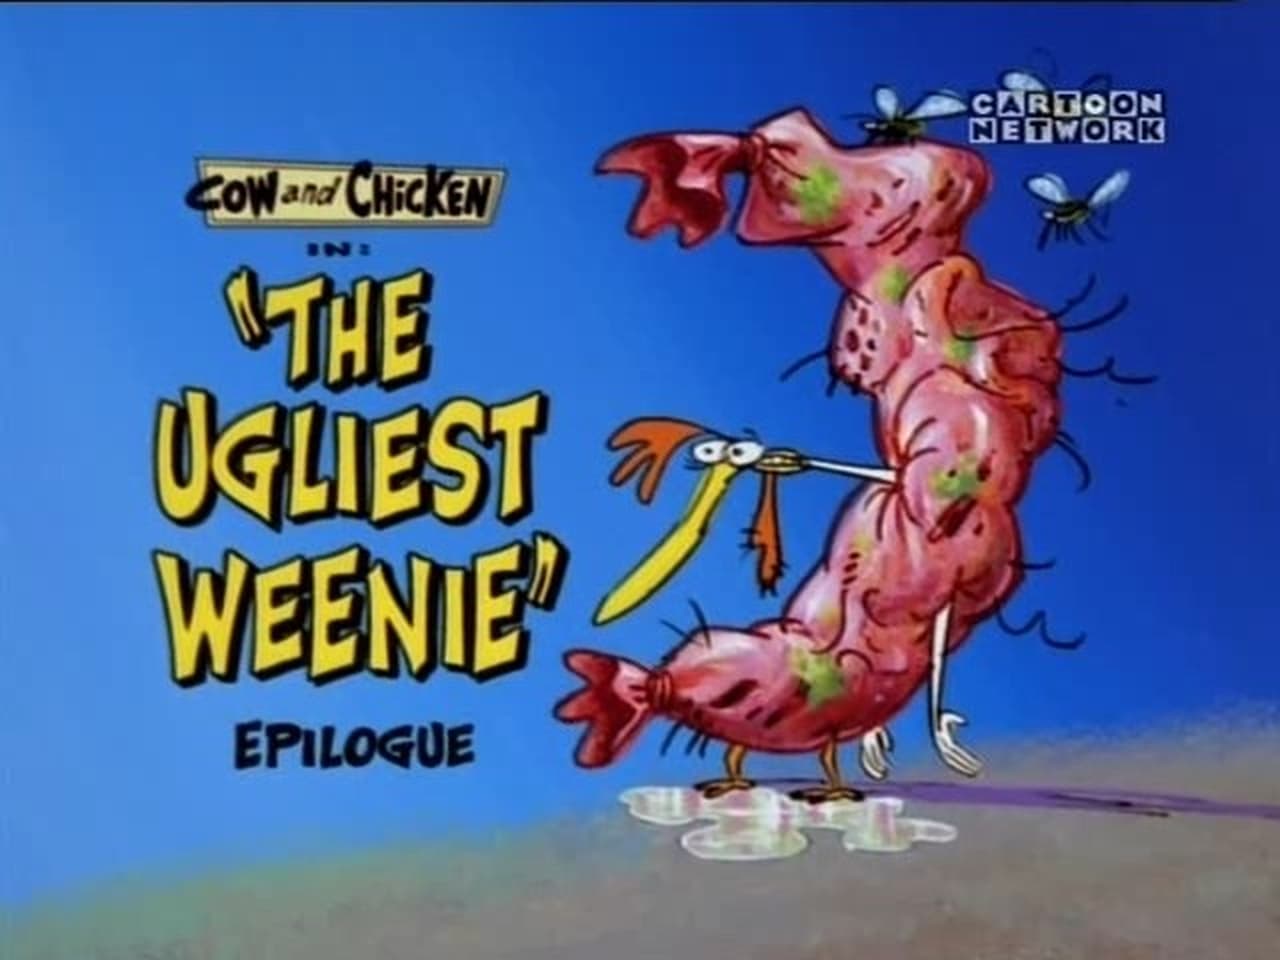 Cow and Chicken - Season 1 Episode 10 : The Ugliest Weenie - Epilogue